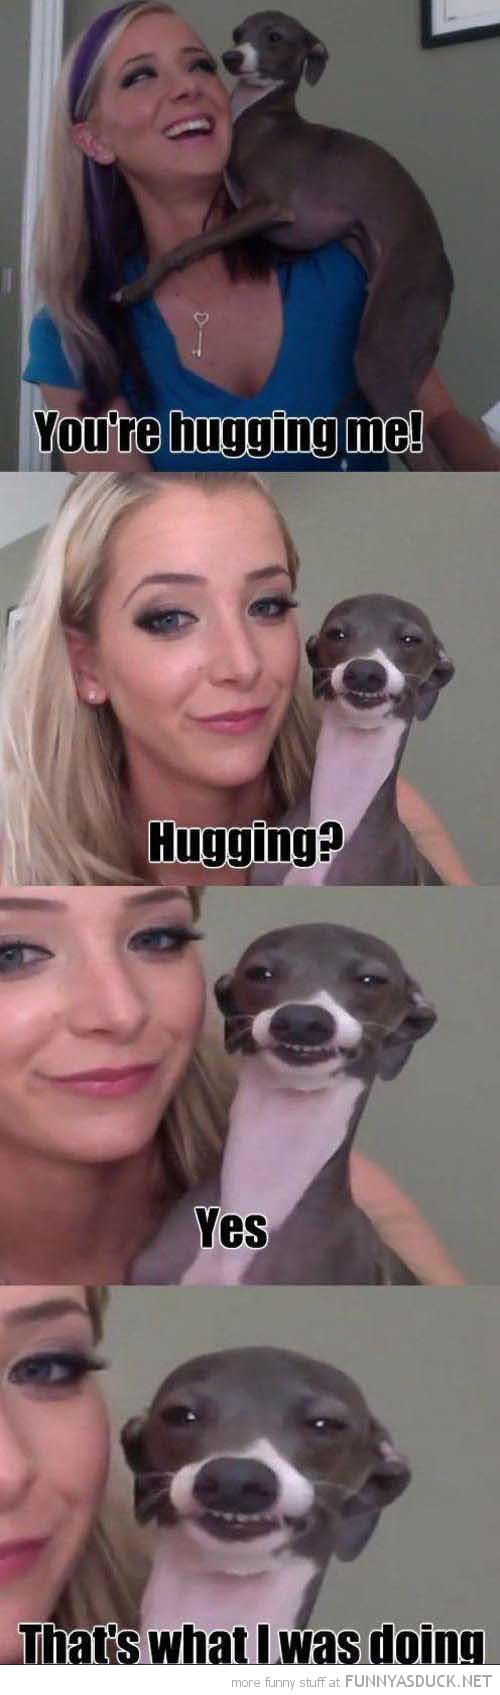 Hugging?